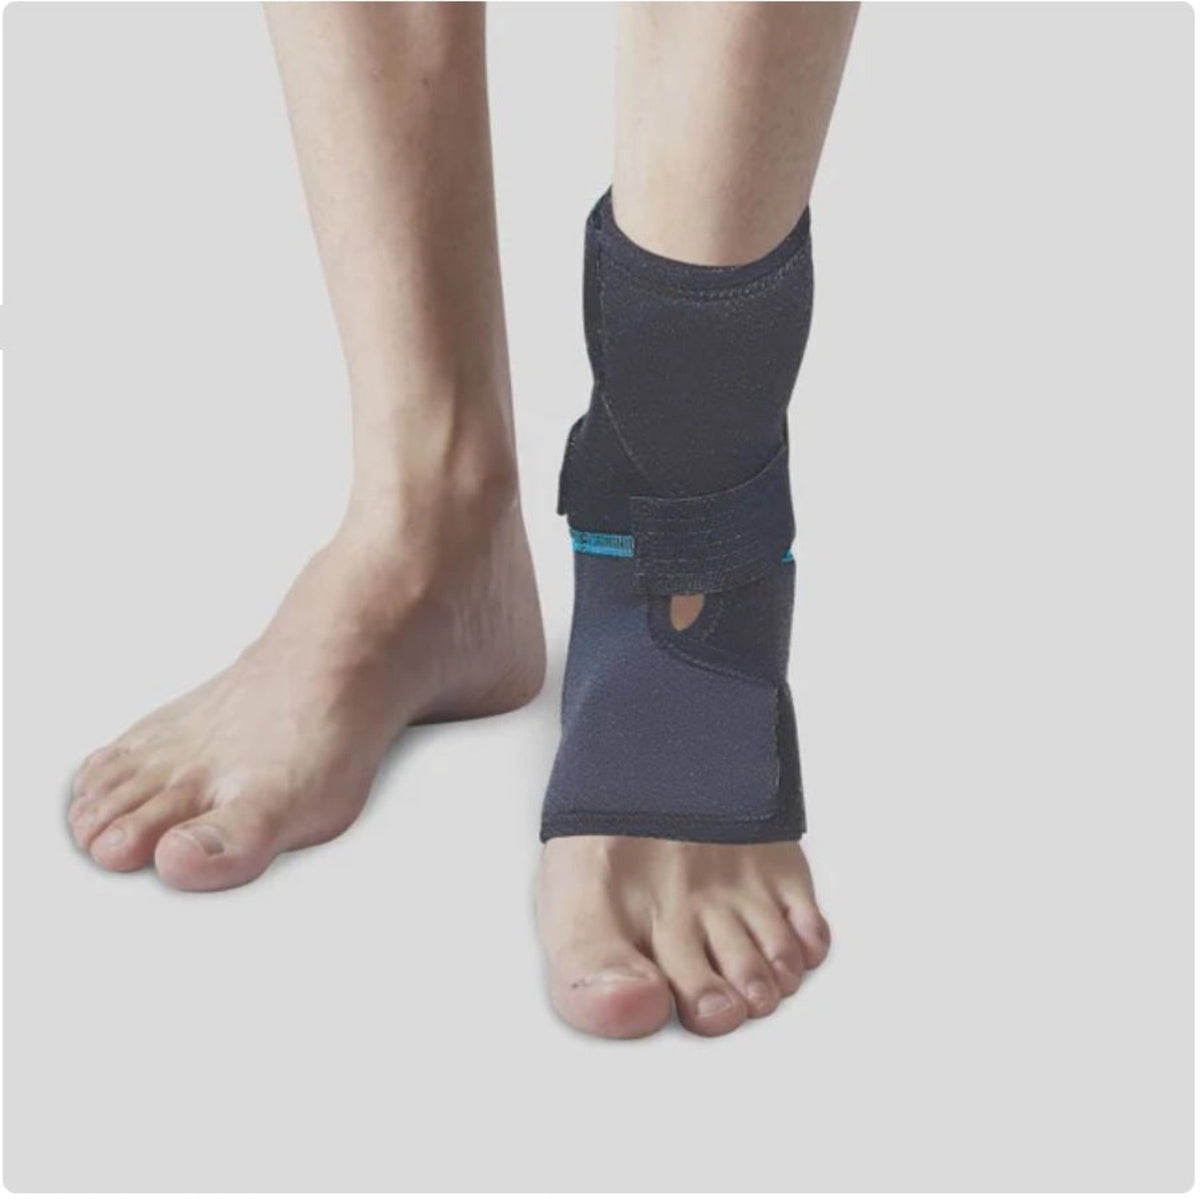 Flamingo Health Orthopaedic Adjustable Ankle Support Universal Code 2374